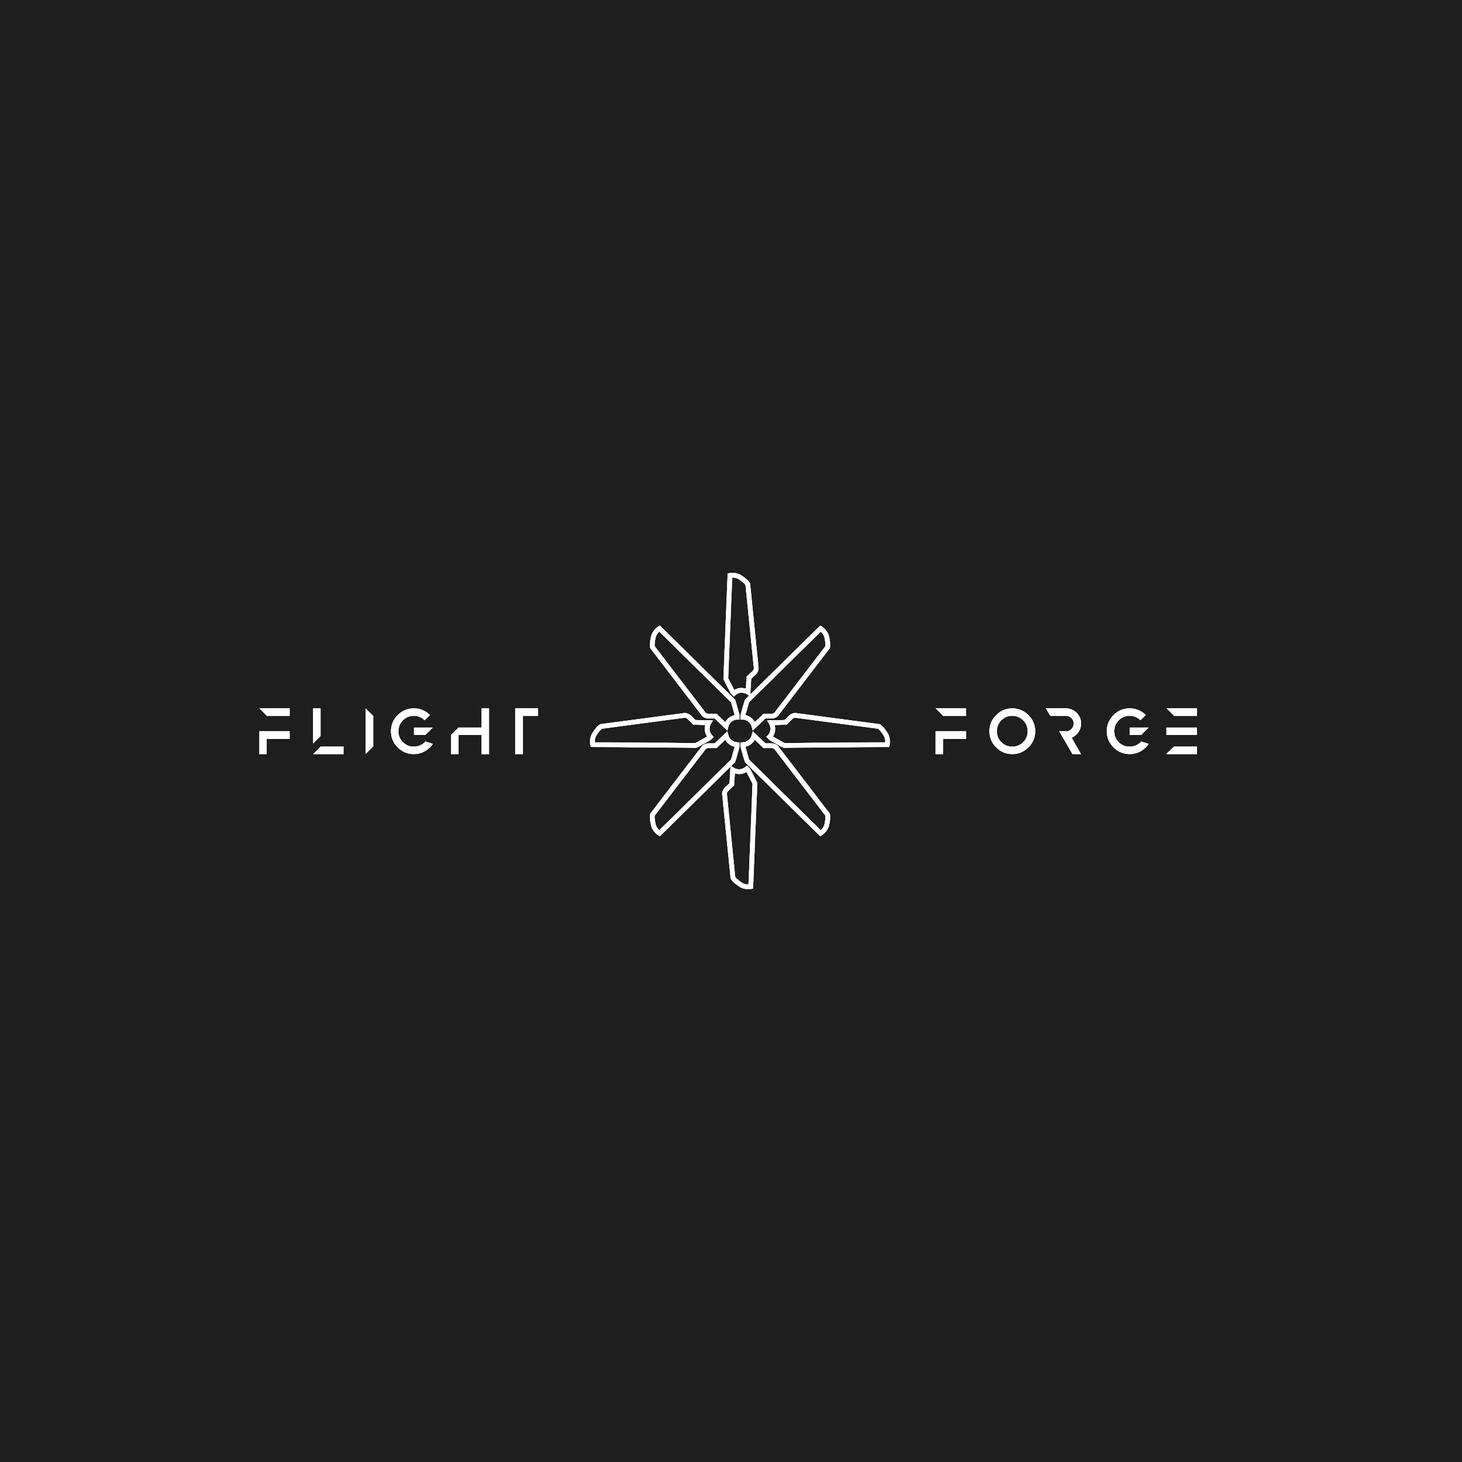 Flight Forge Logo